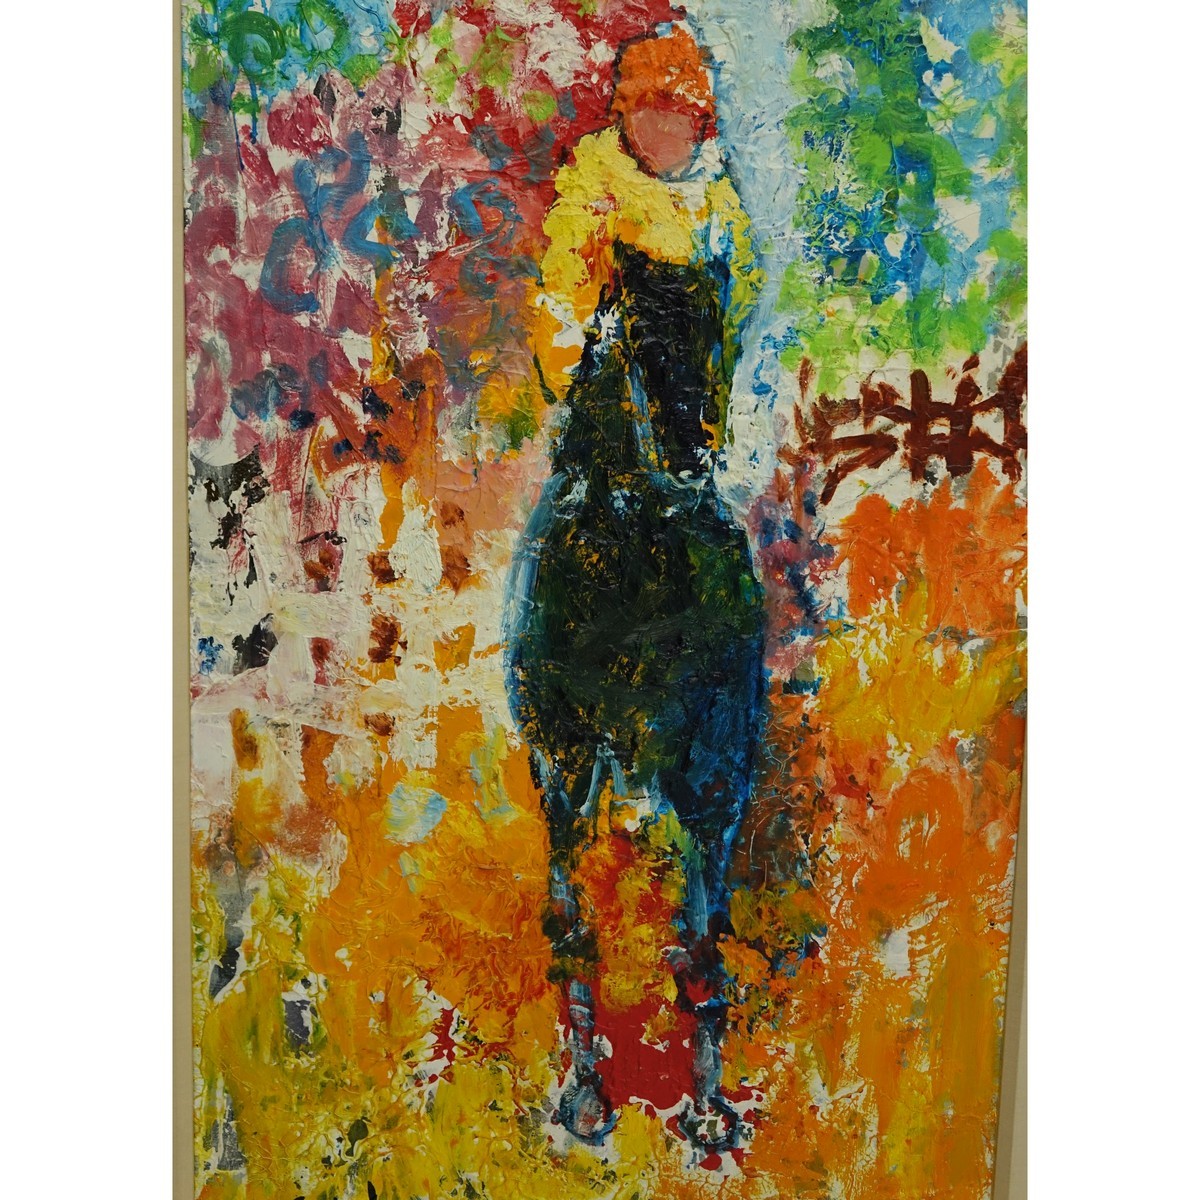 Willering Epko, French (born 1928) Oil on canvas "Horse And Rider". Signed lower left, Gallery Label en verso: Galerie Felix Vercel.